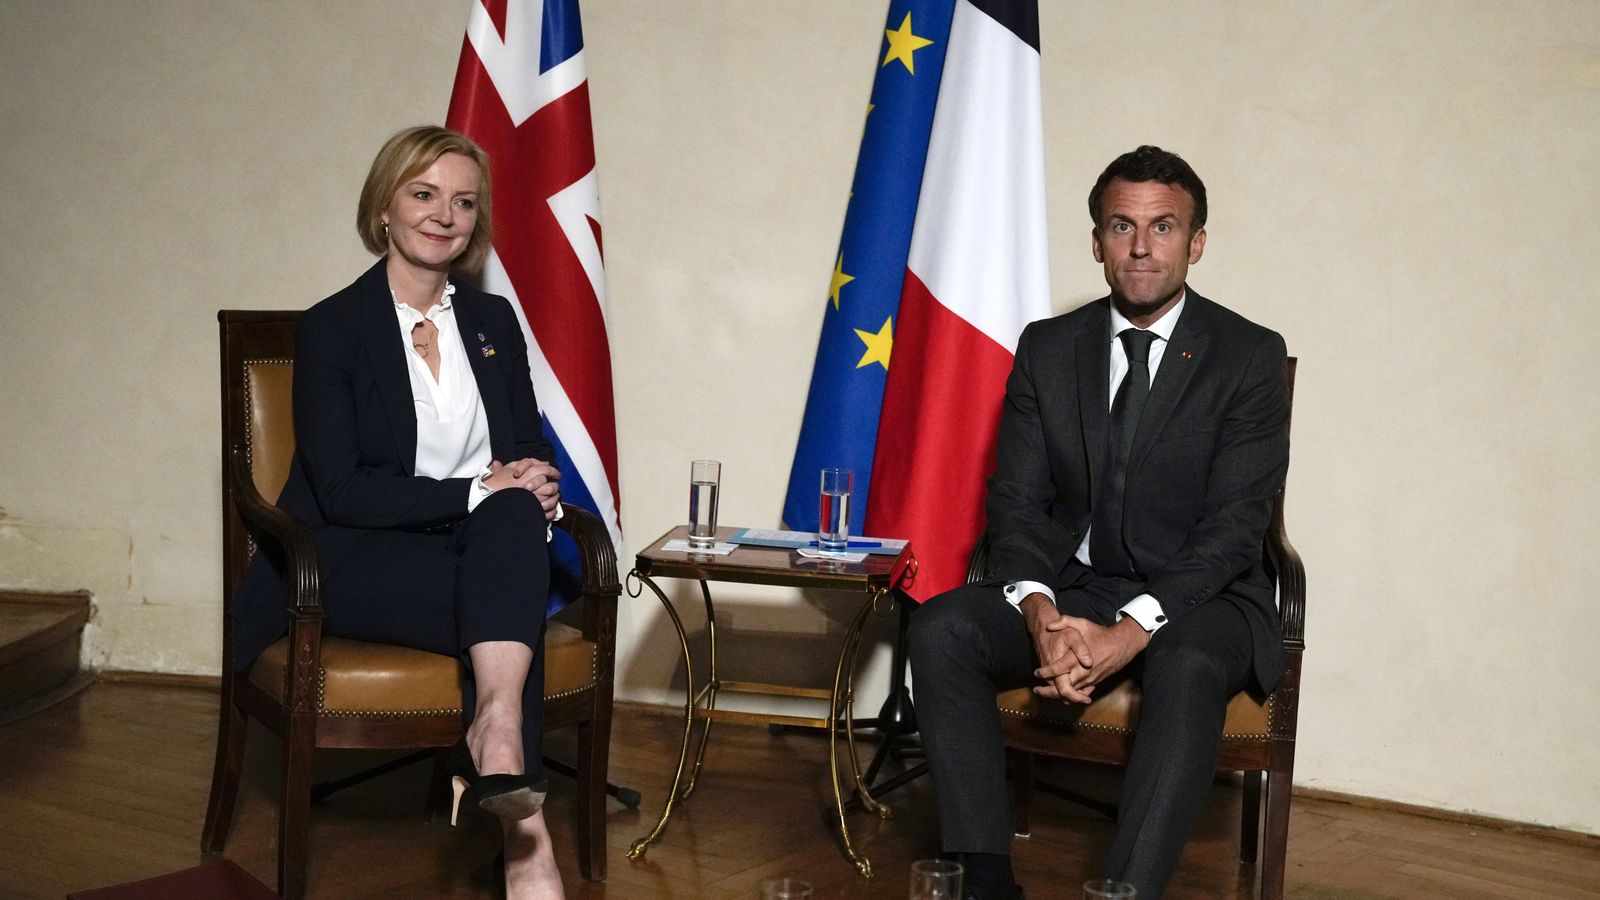 Liz Truss calls Emmanuel Macron 'a friend' as she seeks to improve UK-France relations